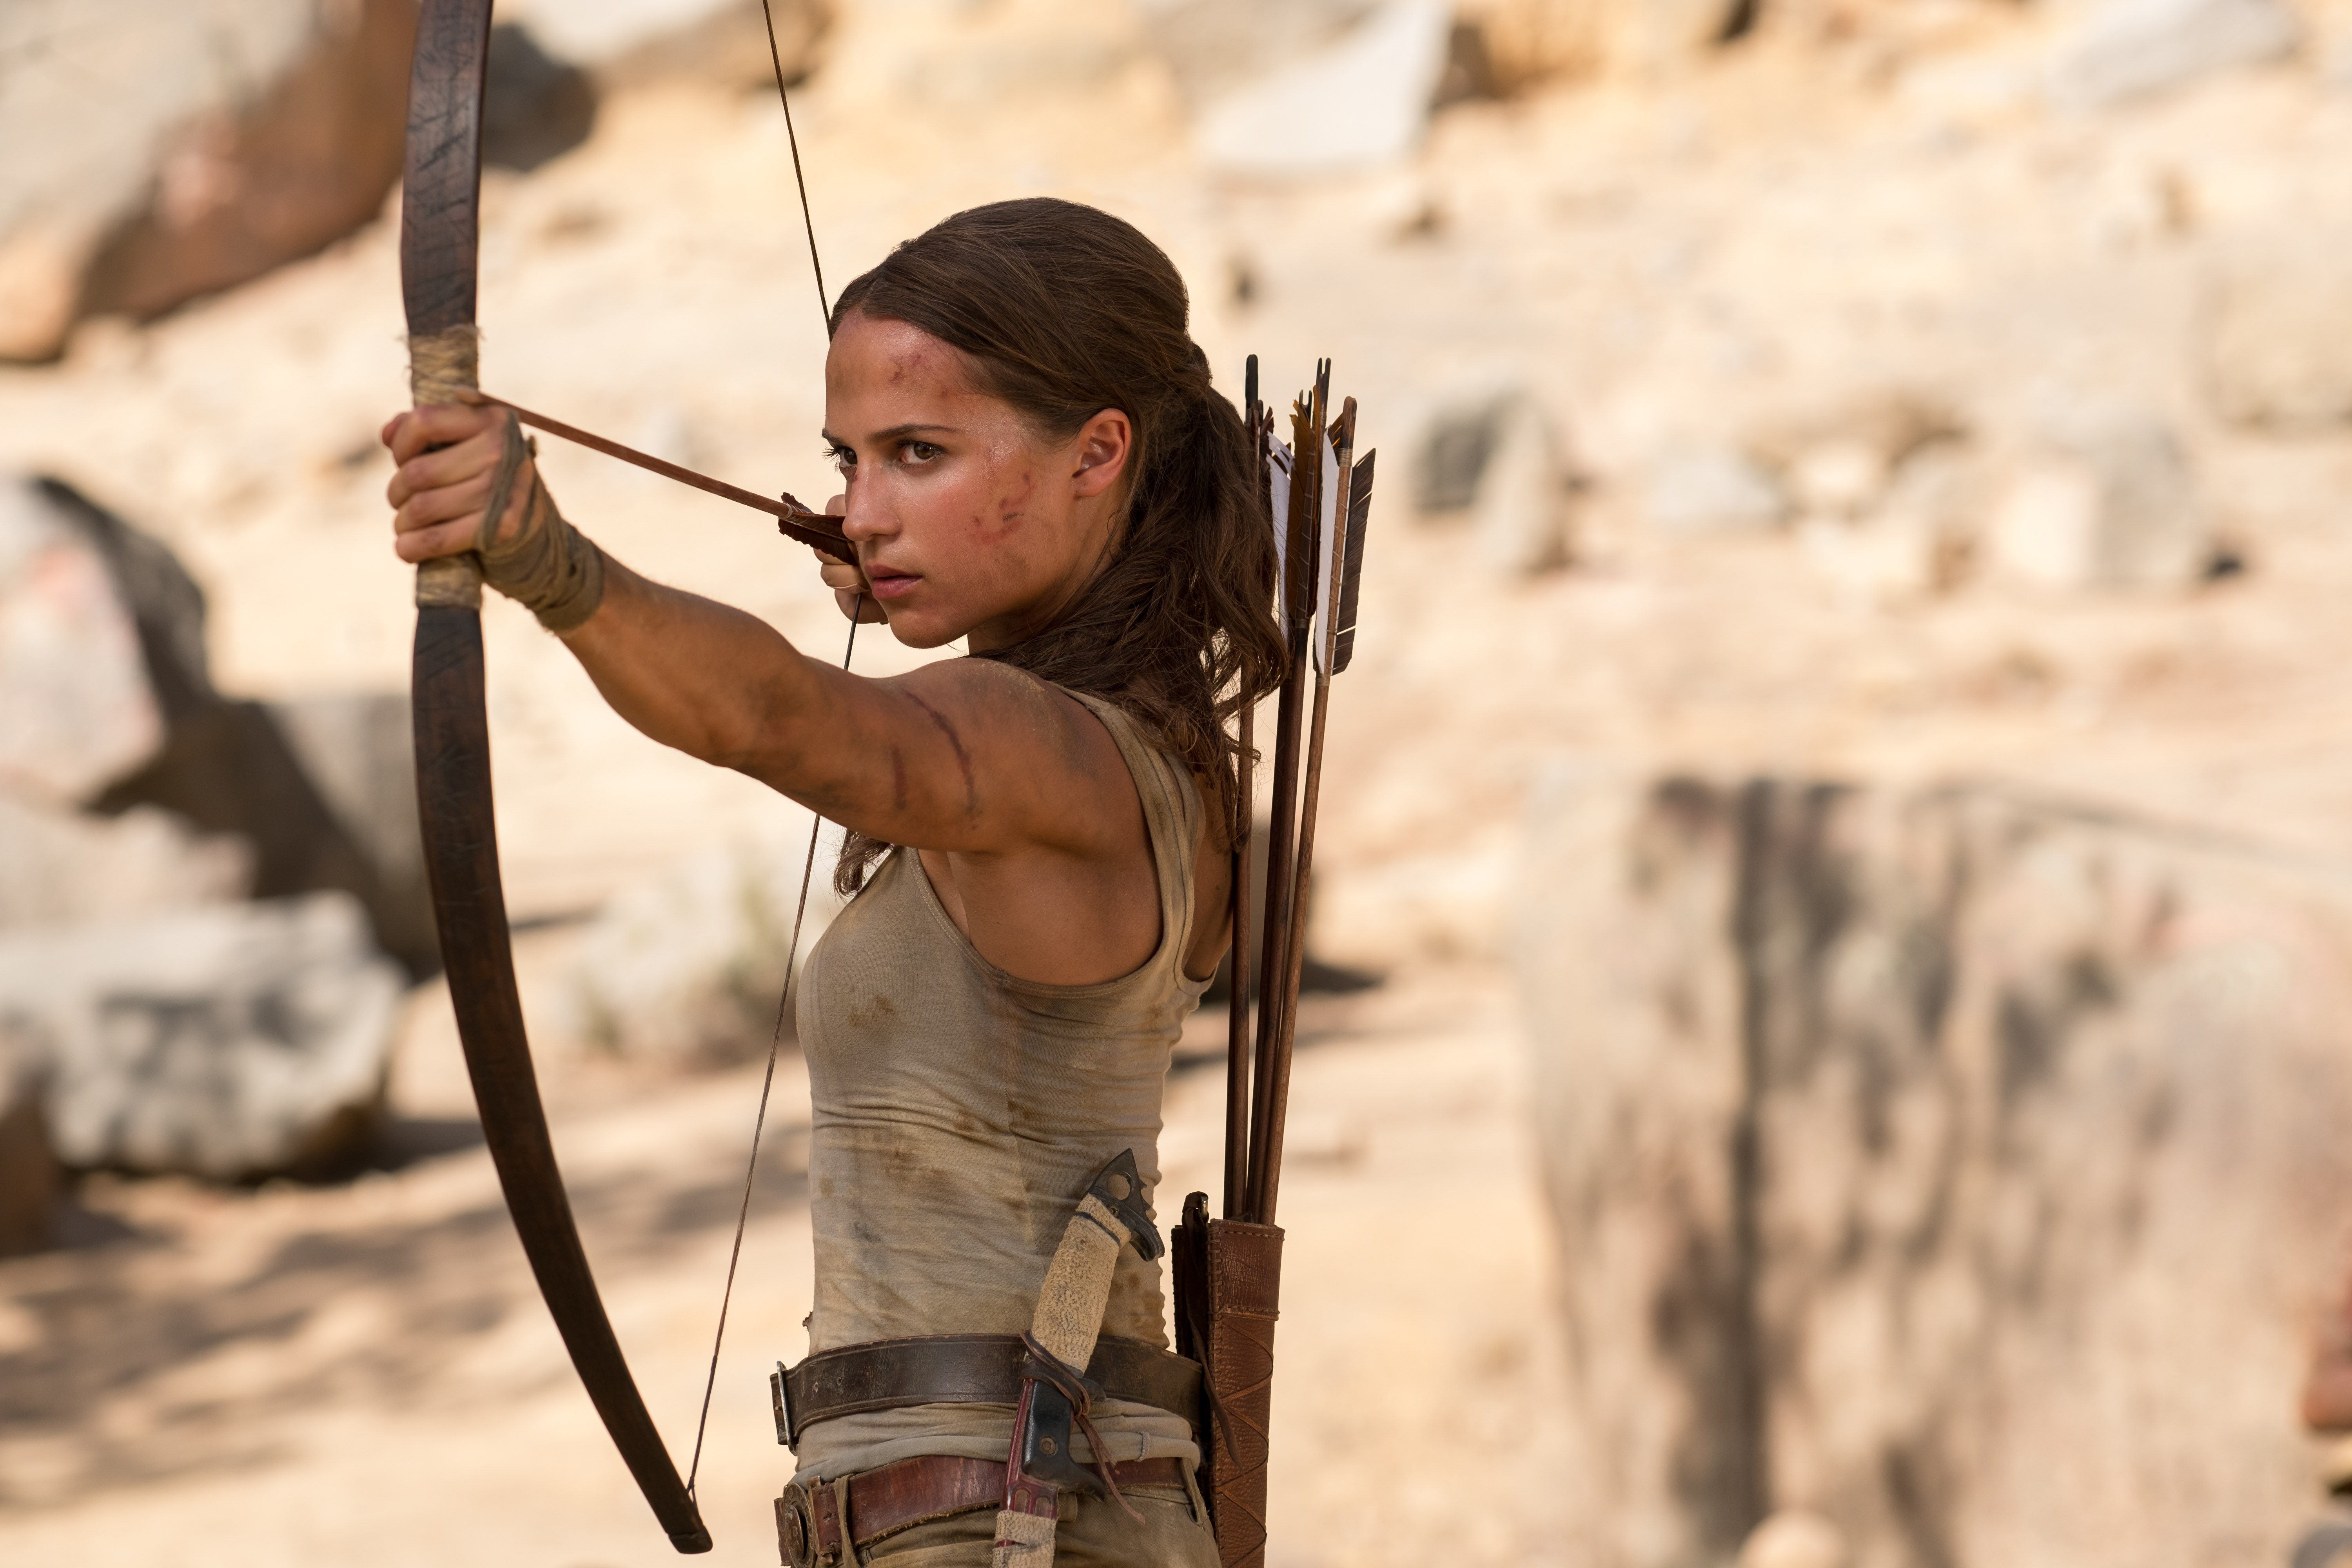 Tomb Raider Film Trailer Kritik